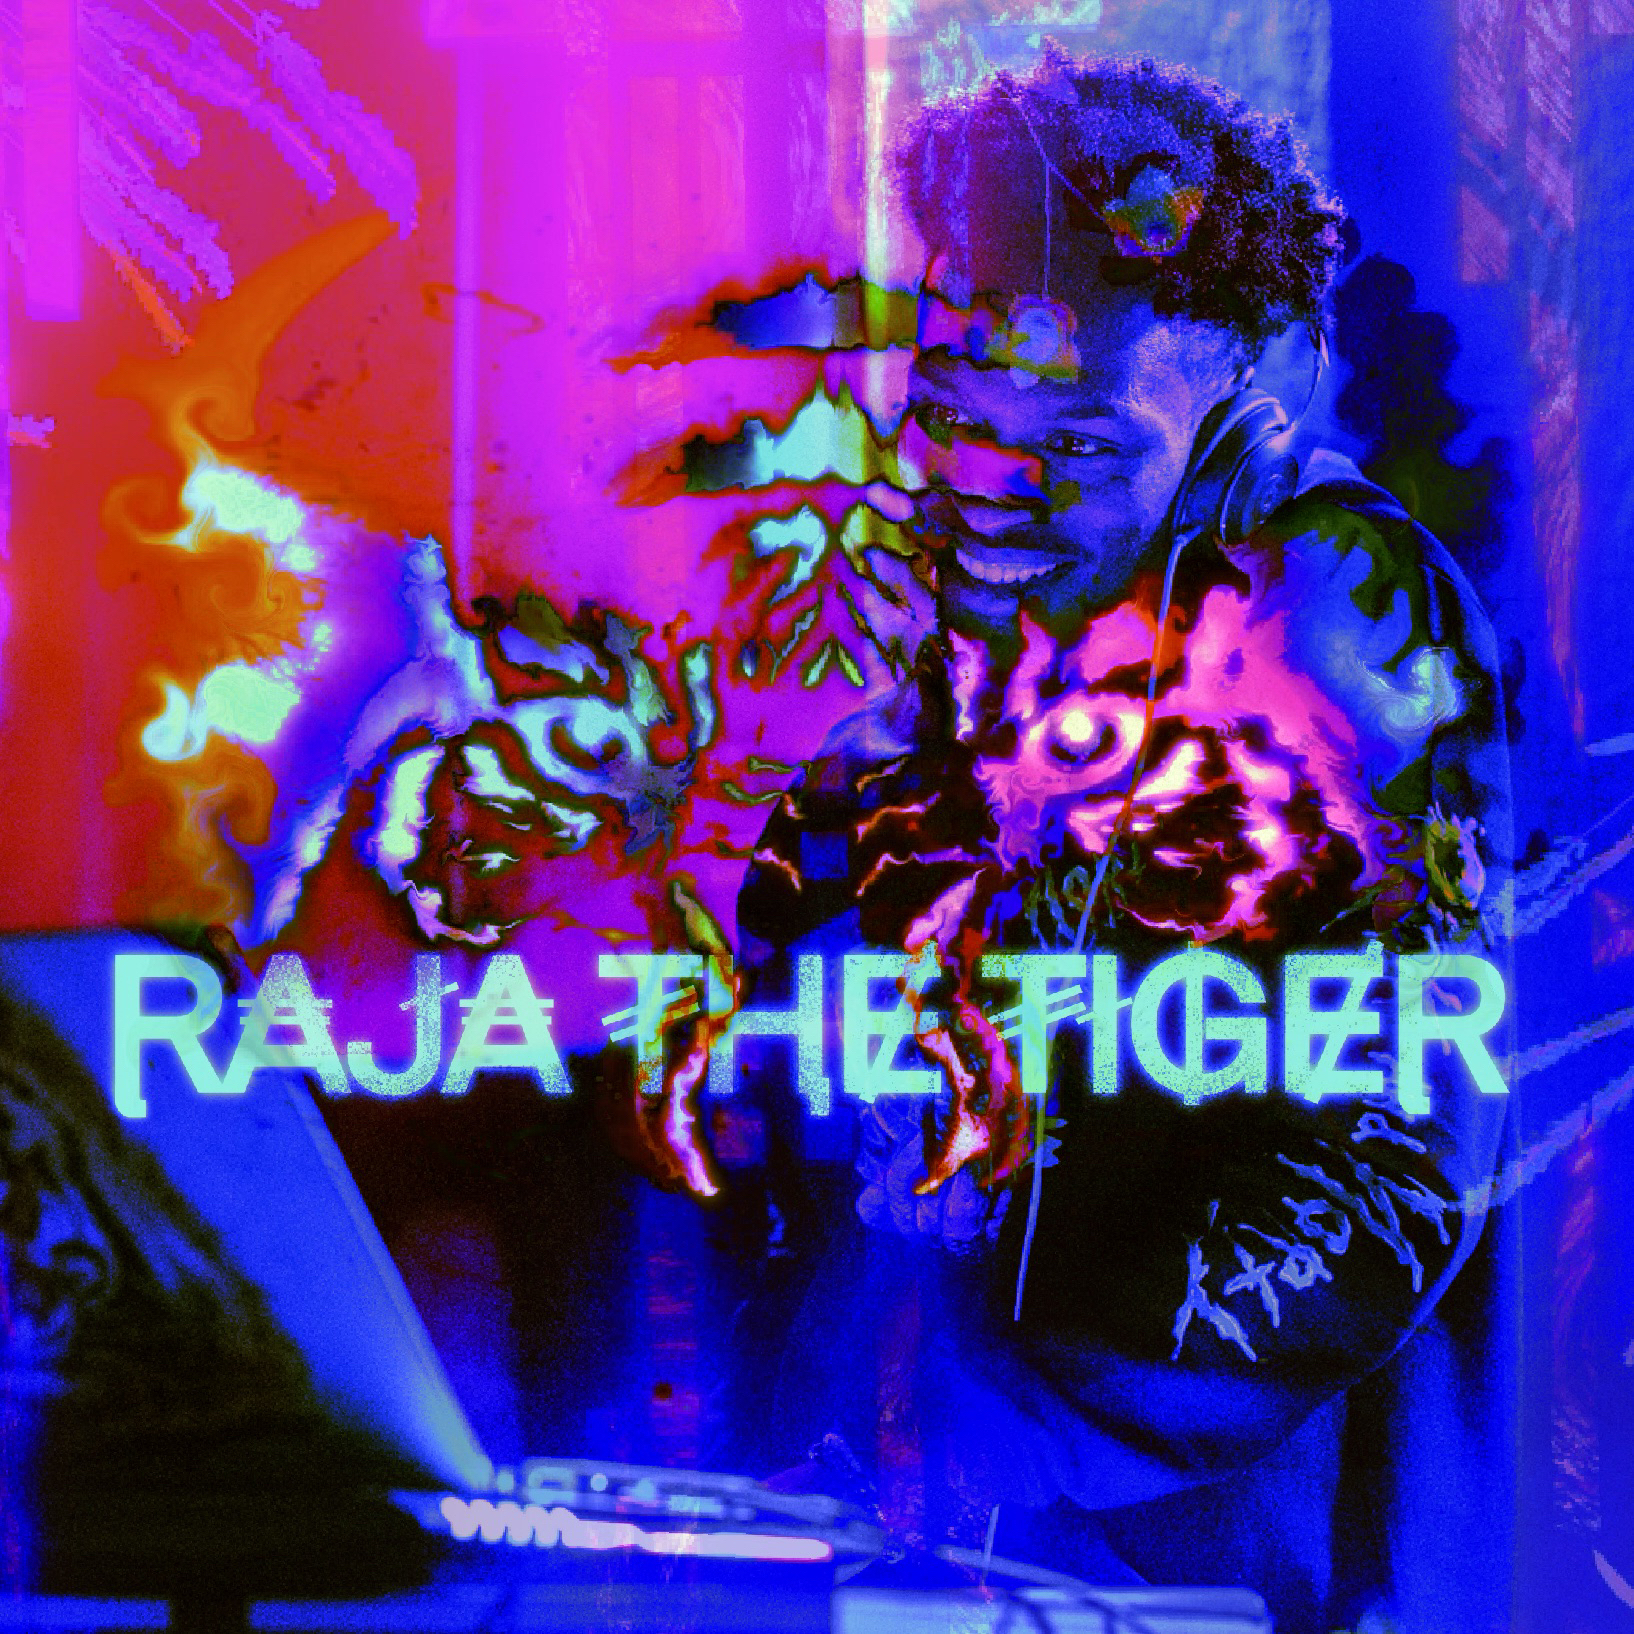 Raja The Tiger